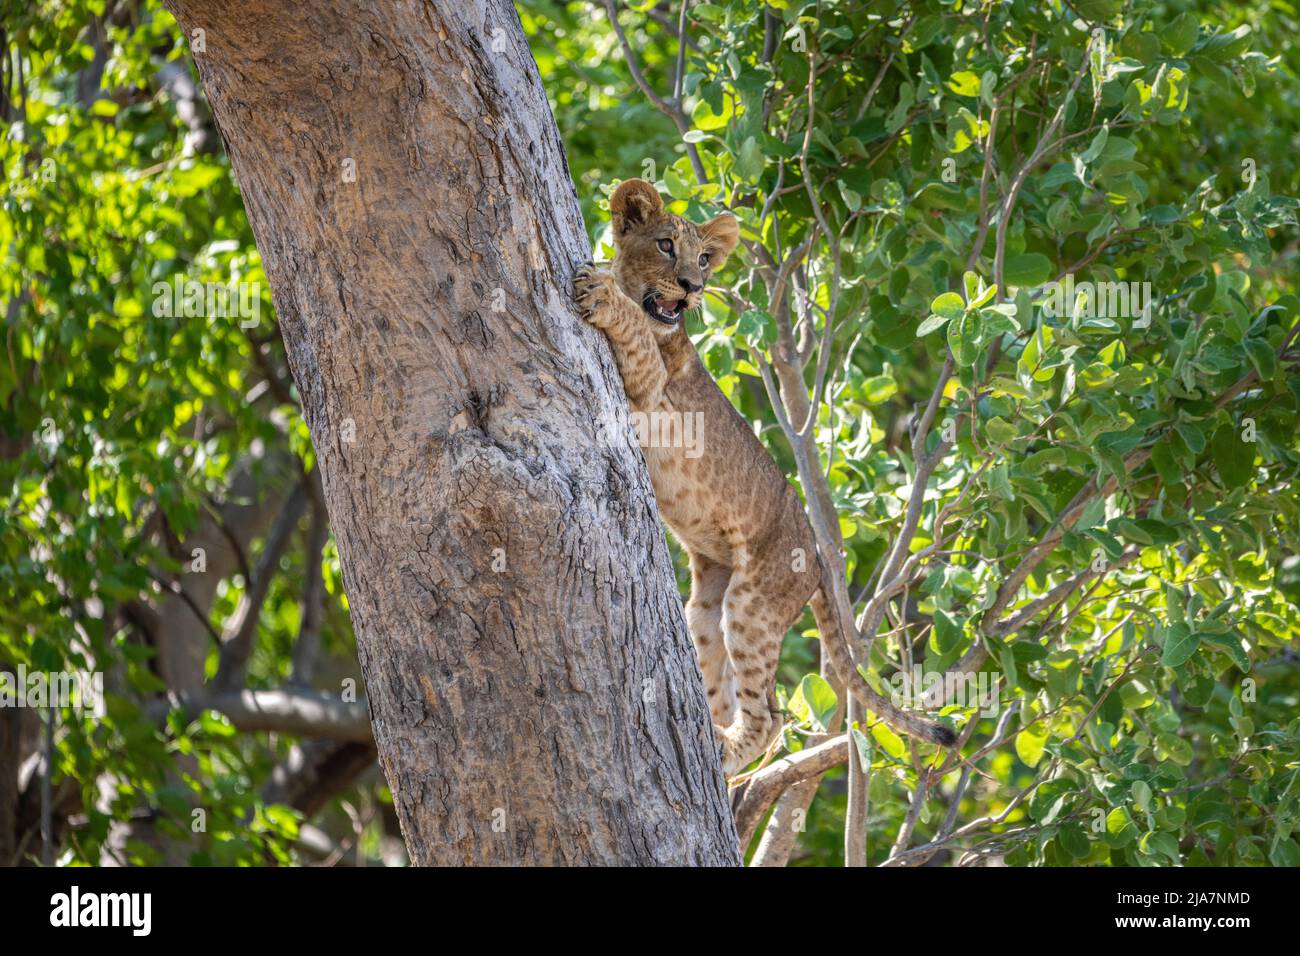 Lion cub attempting to climbs trees in Okavango Delta grassland Stock Photo